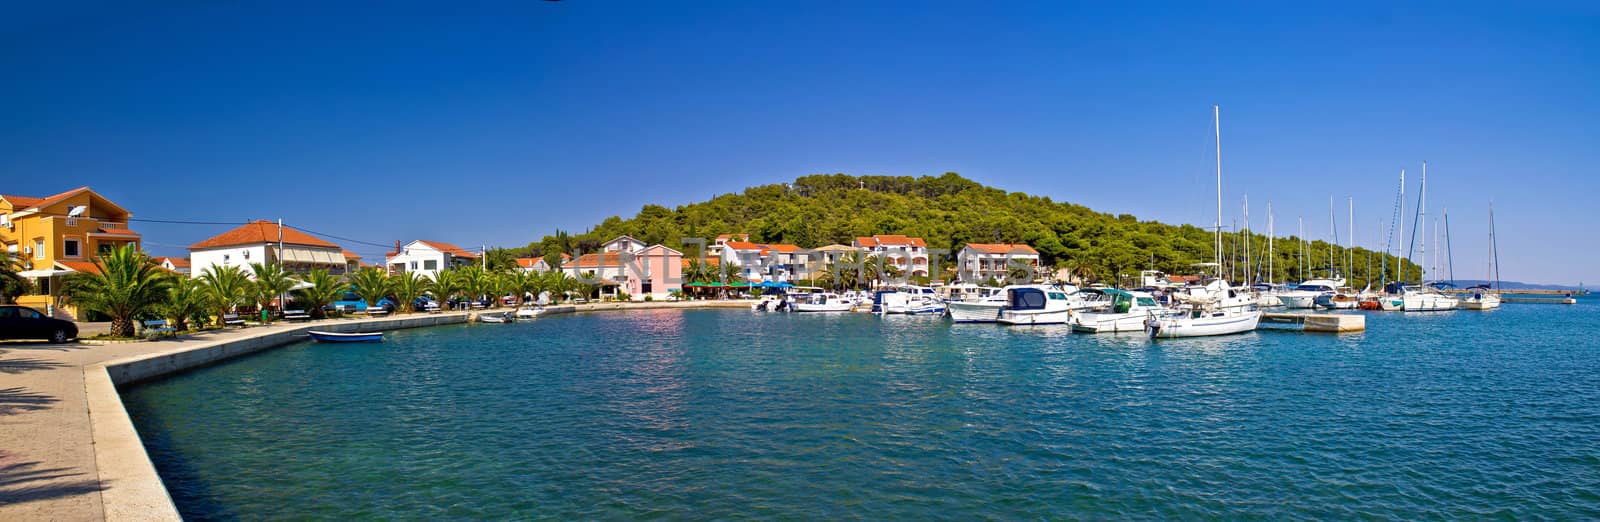 Kukljica, small fishermen town on Island of Ugljan panoramic view, Dalmatia, Croatia